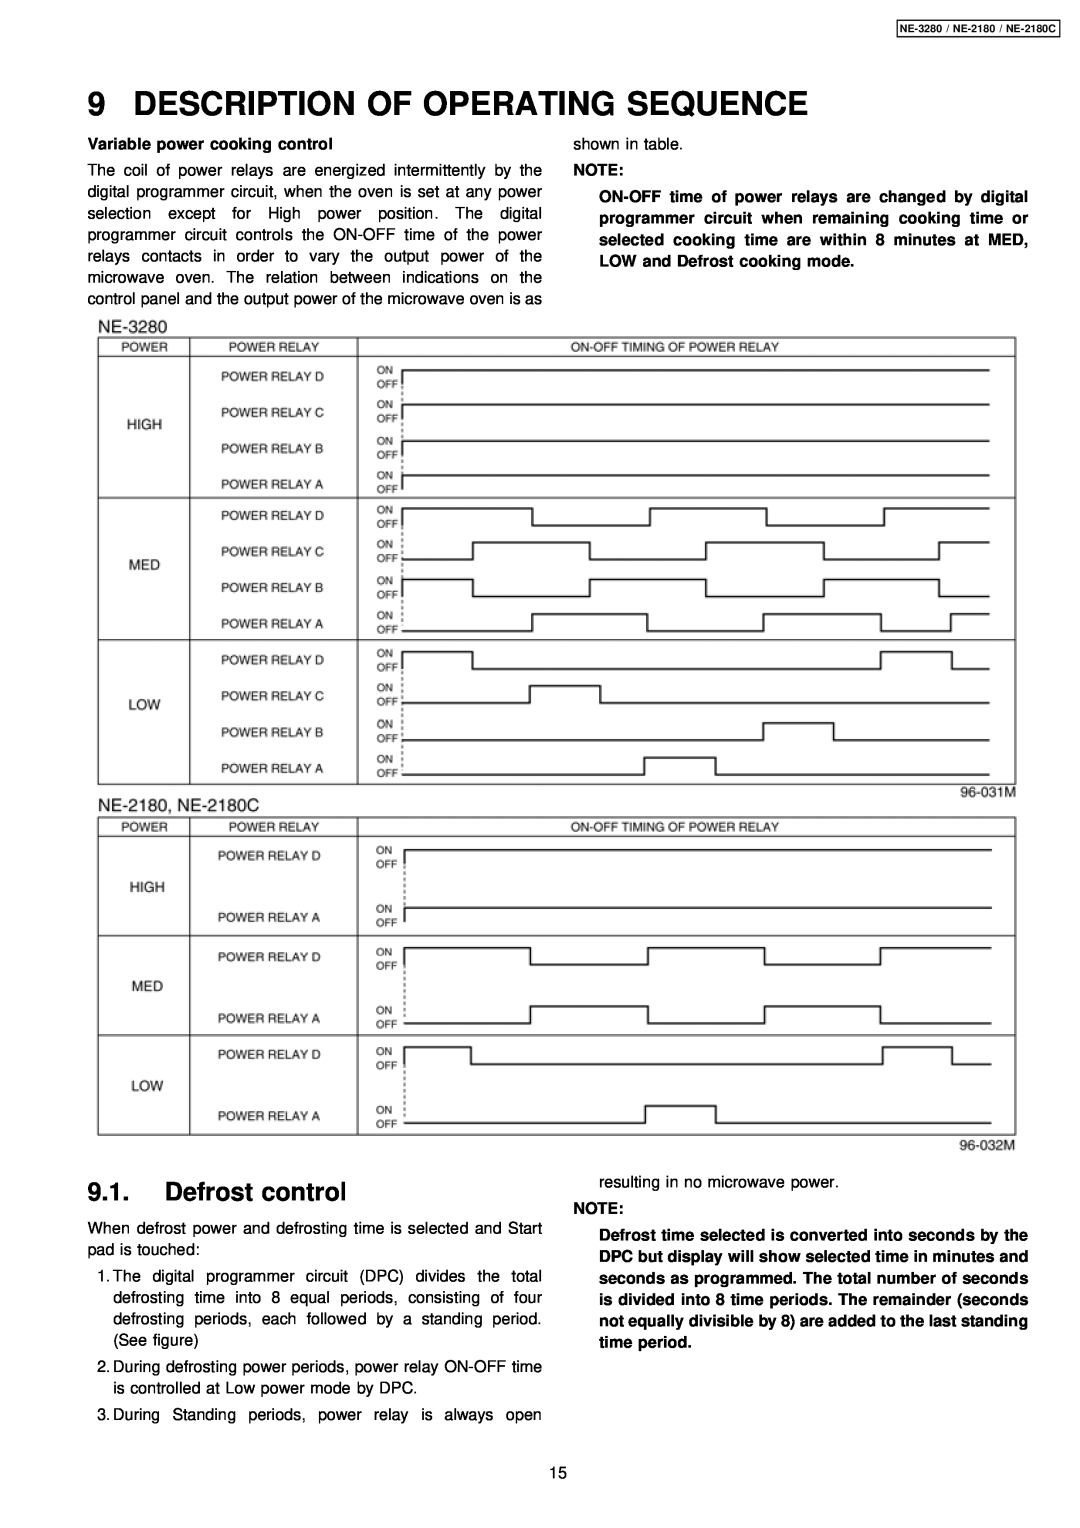 Panasonic NE-3280, NE-2180C manual Description Of Operating Sequence, Defrost control 